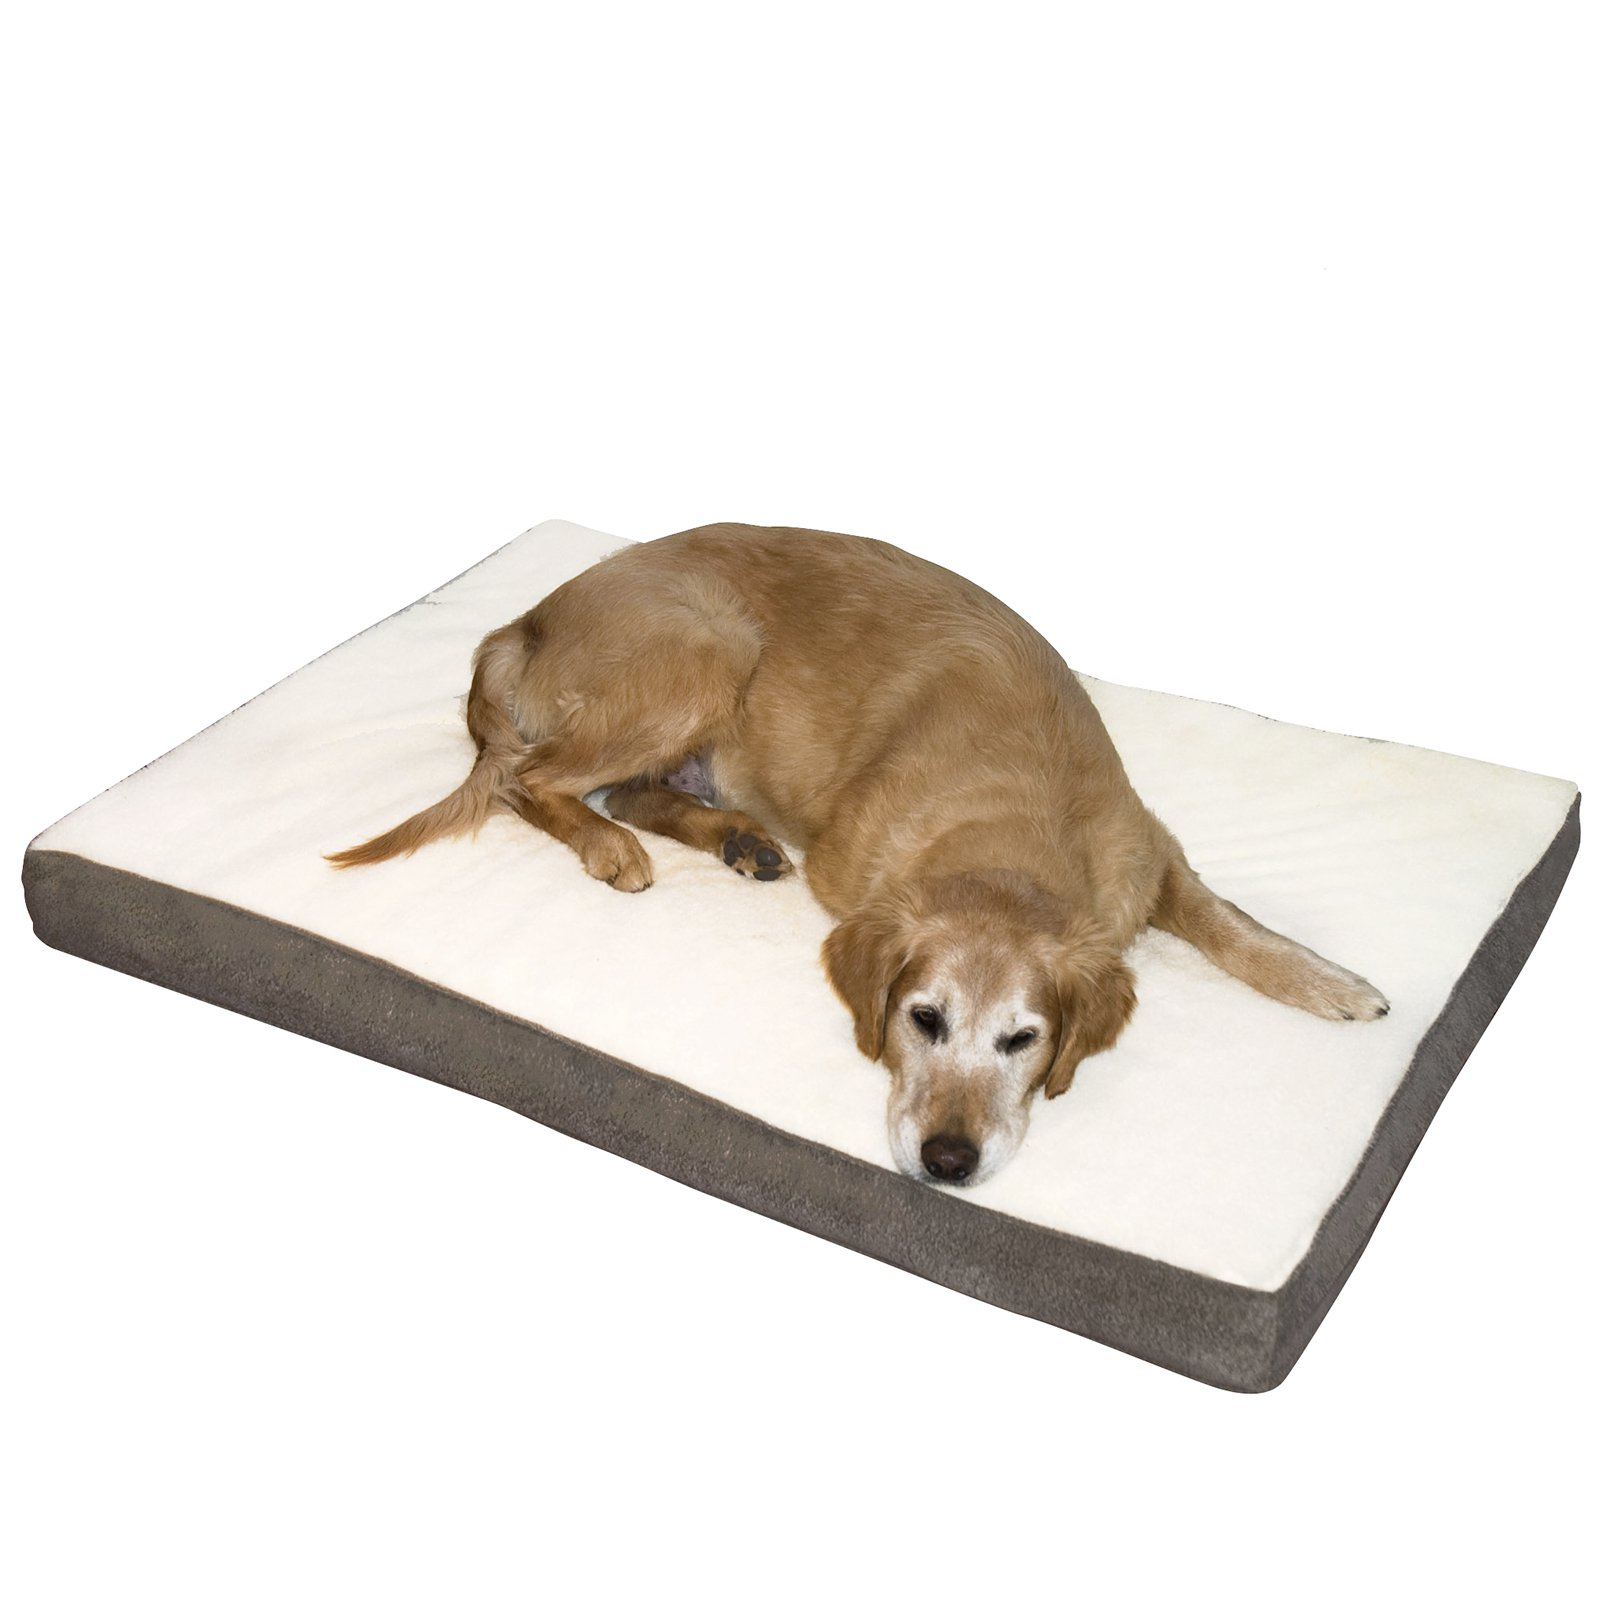 0098198514720 - OSCAR ORTHOPEDIC DOG BED SIZE SMALL 24 X 36 COLOR CRIMSON